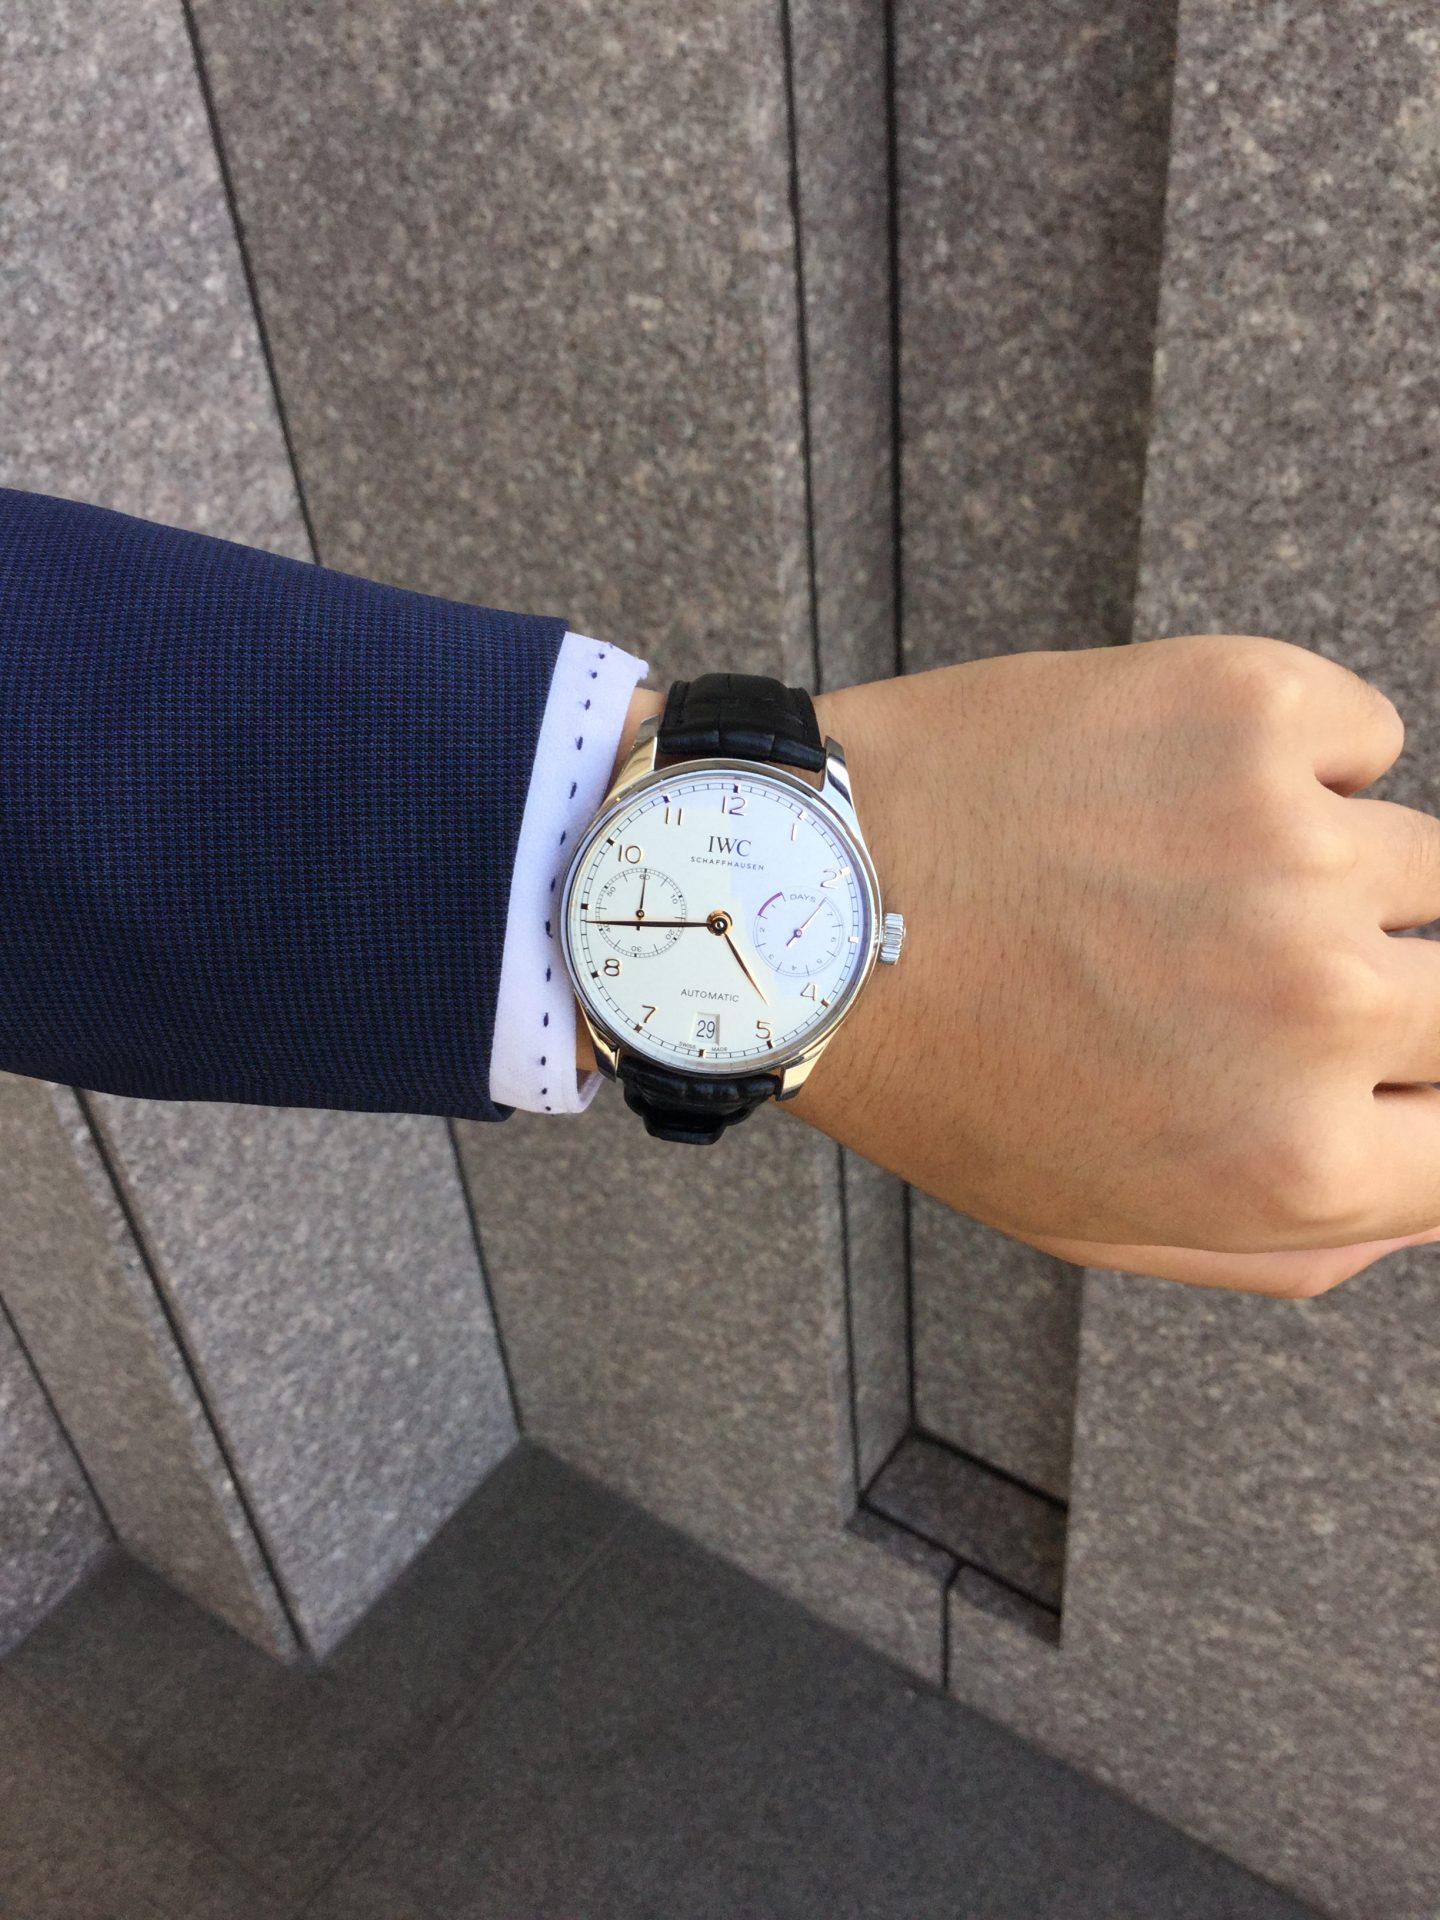 Iwcのご紹介です 岡山県でブランド時計 腕時計の正規販売店ならアイジュエリーウマキ